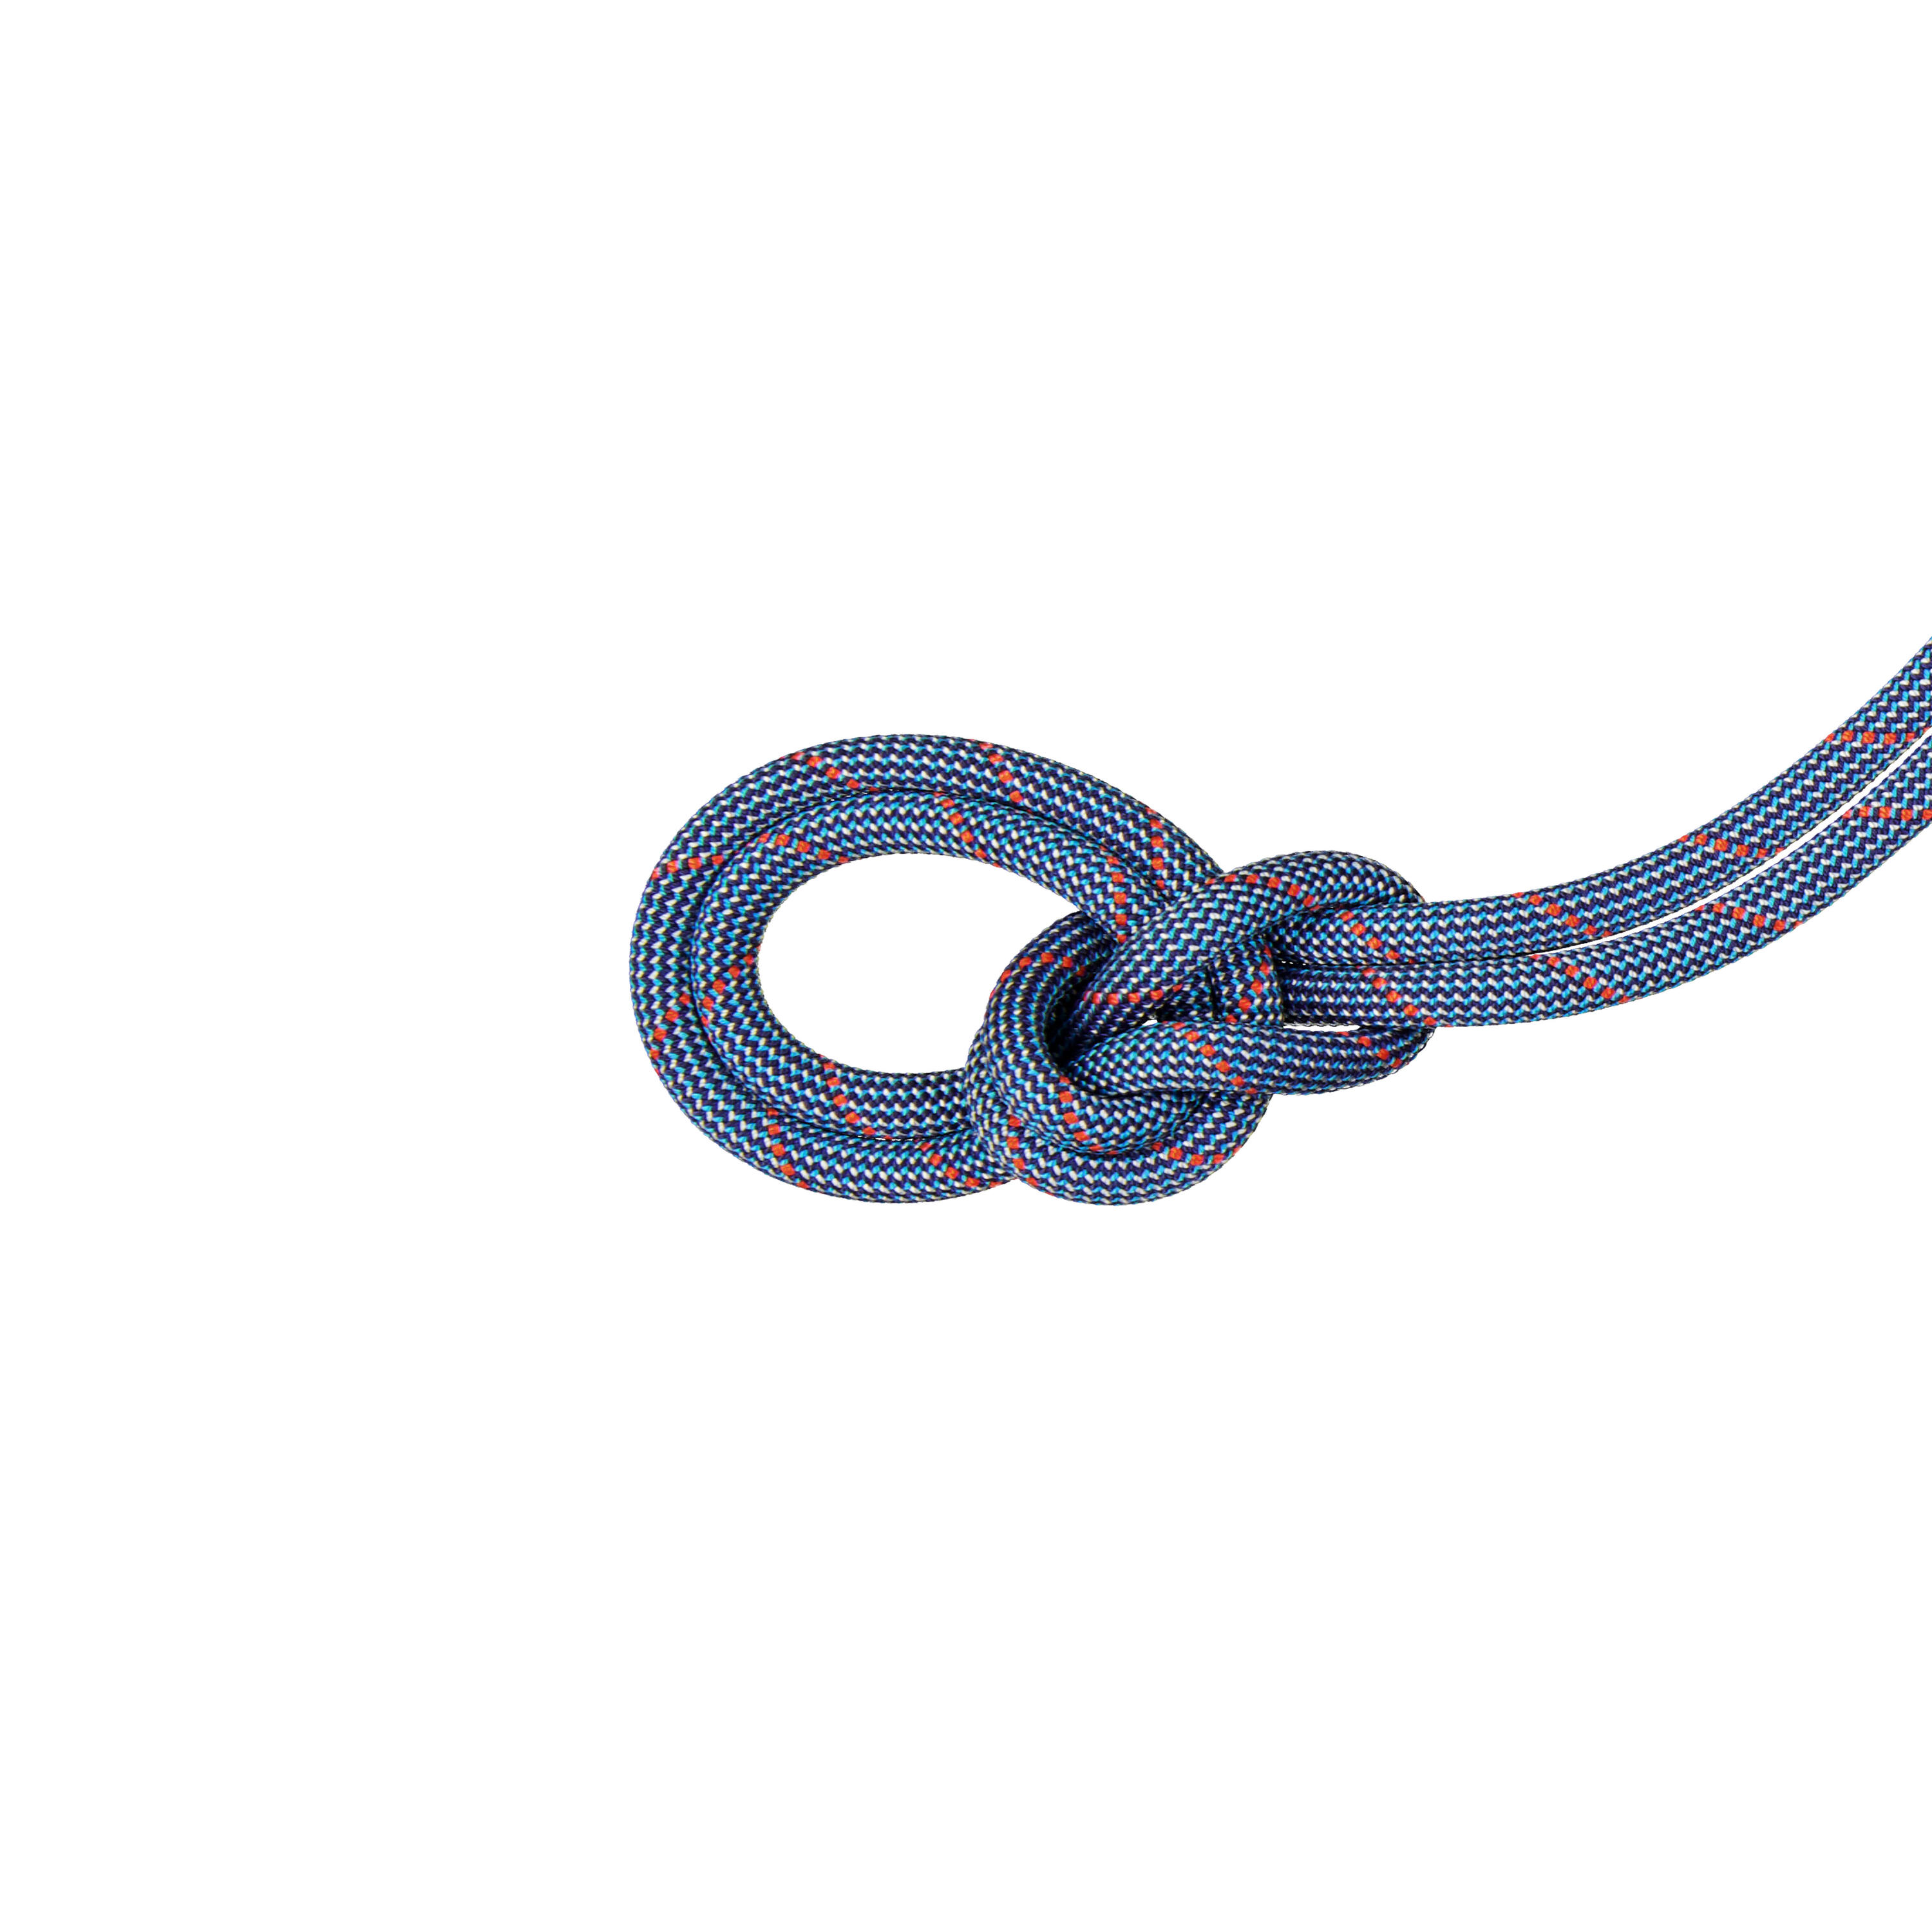 Crag Classic Single Rope 10.2 mm x 60m - Blue 1/4